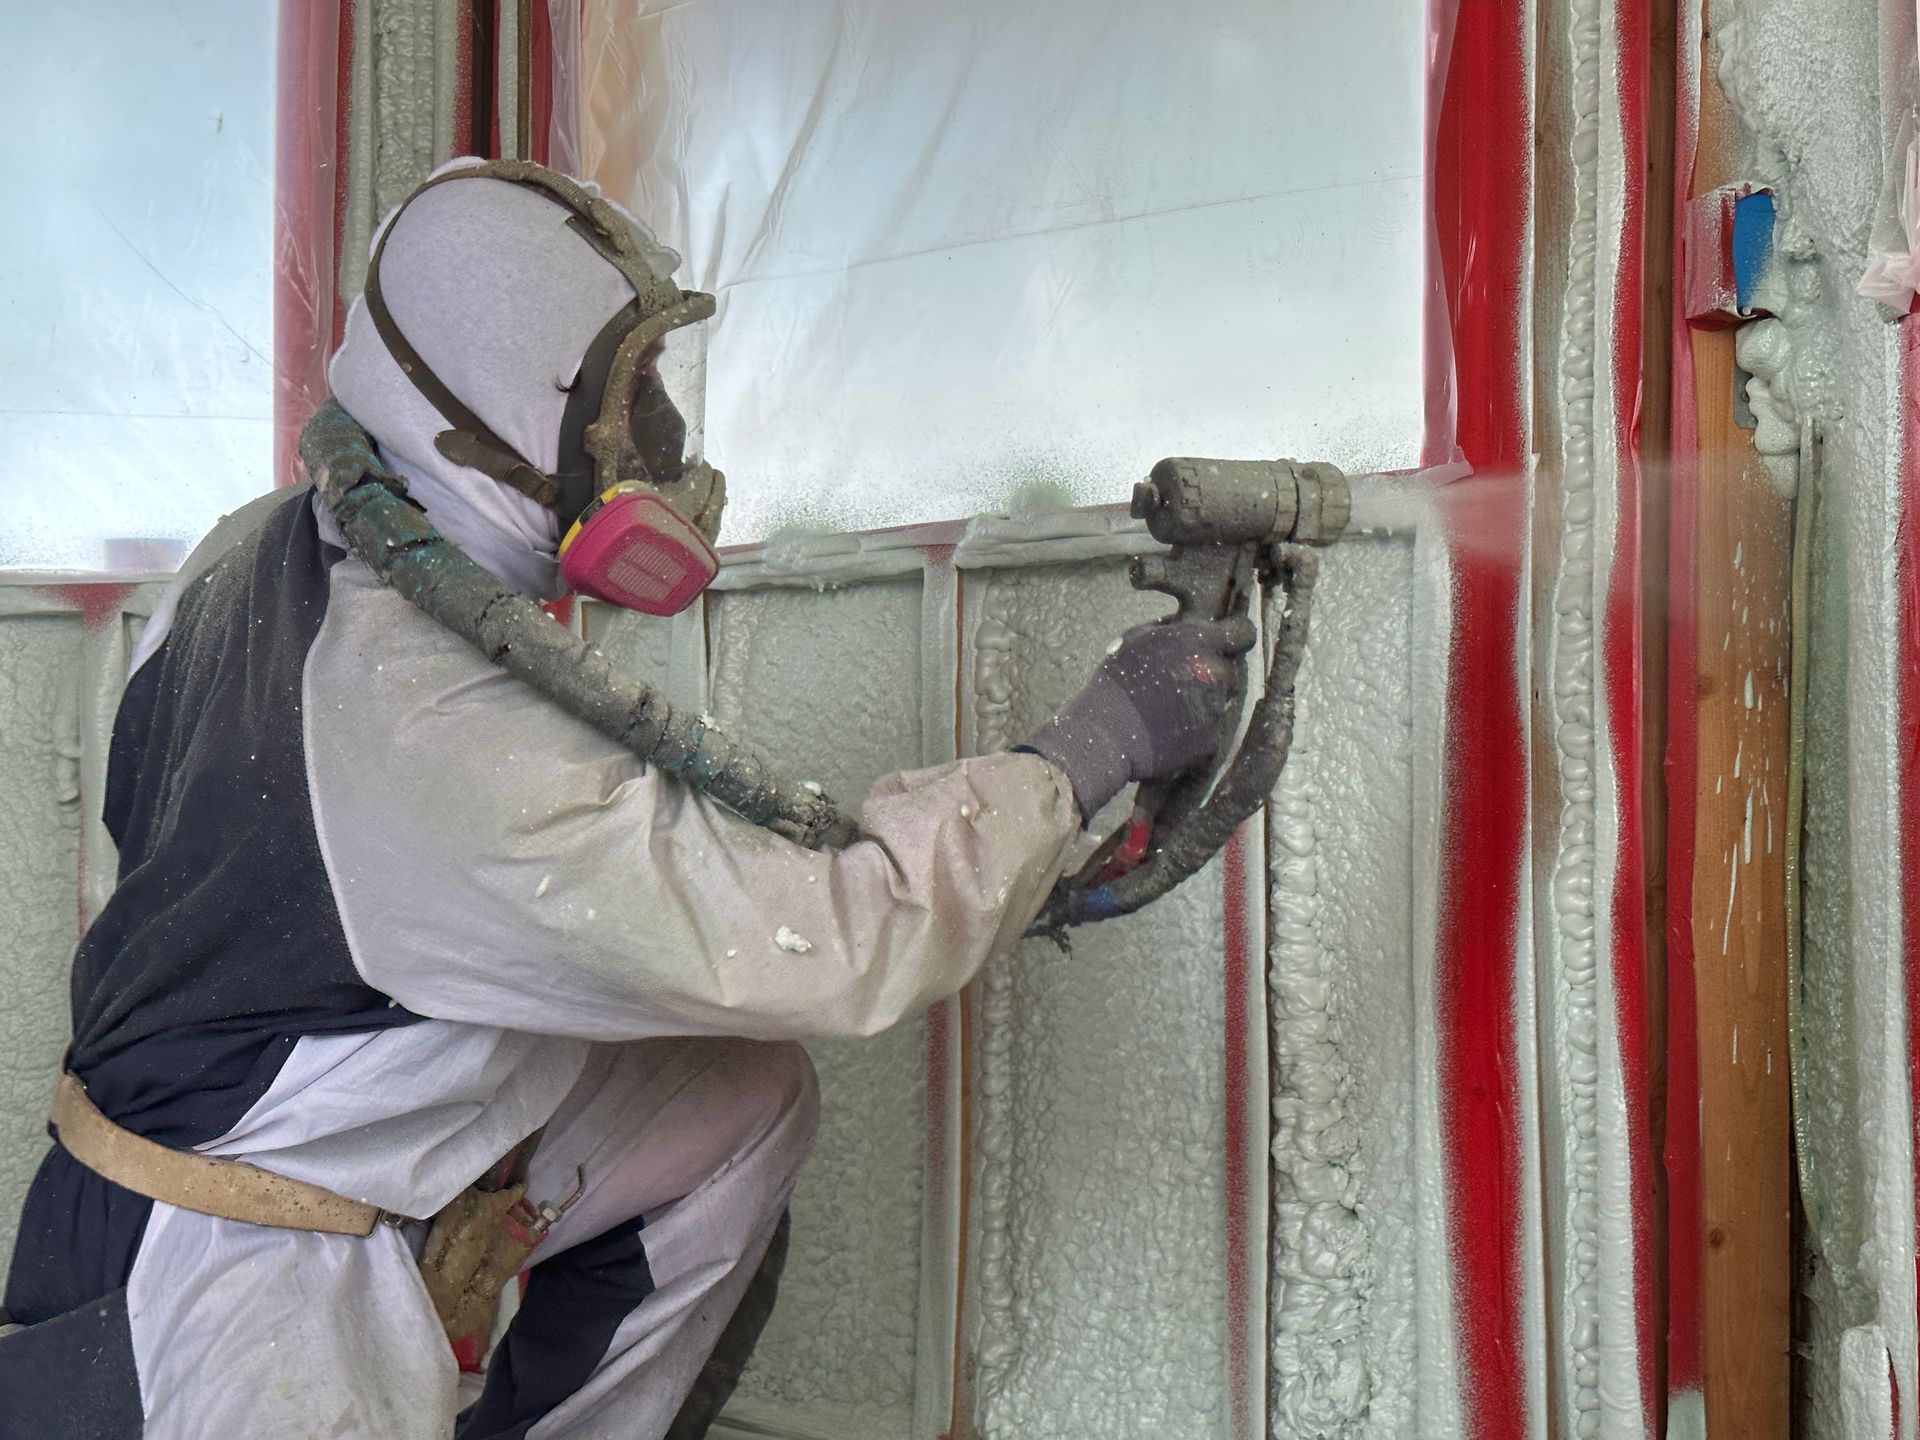 A man wearing a gas mask is spraying foam on a wall.